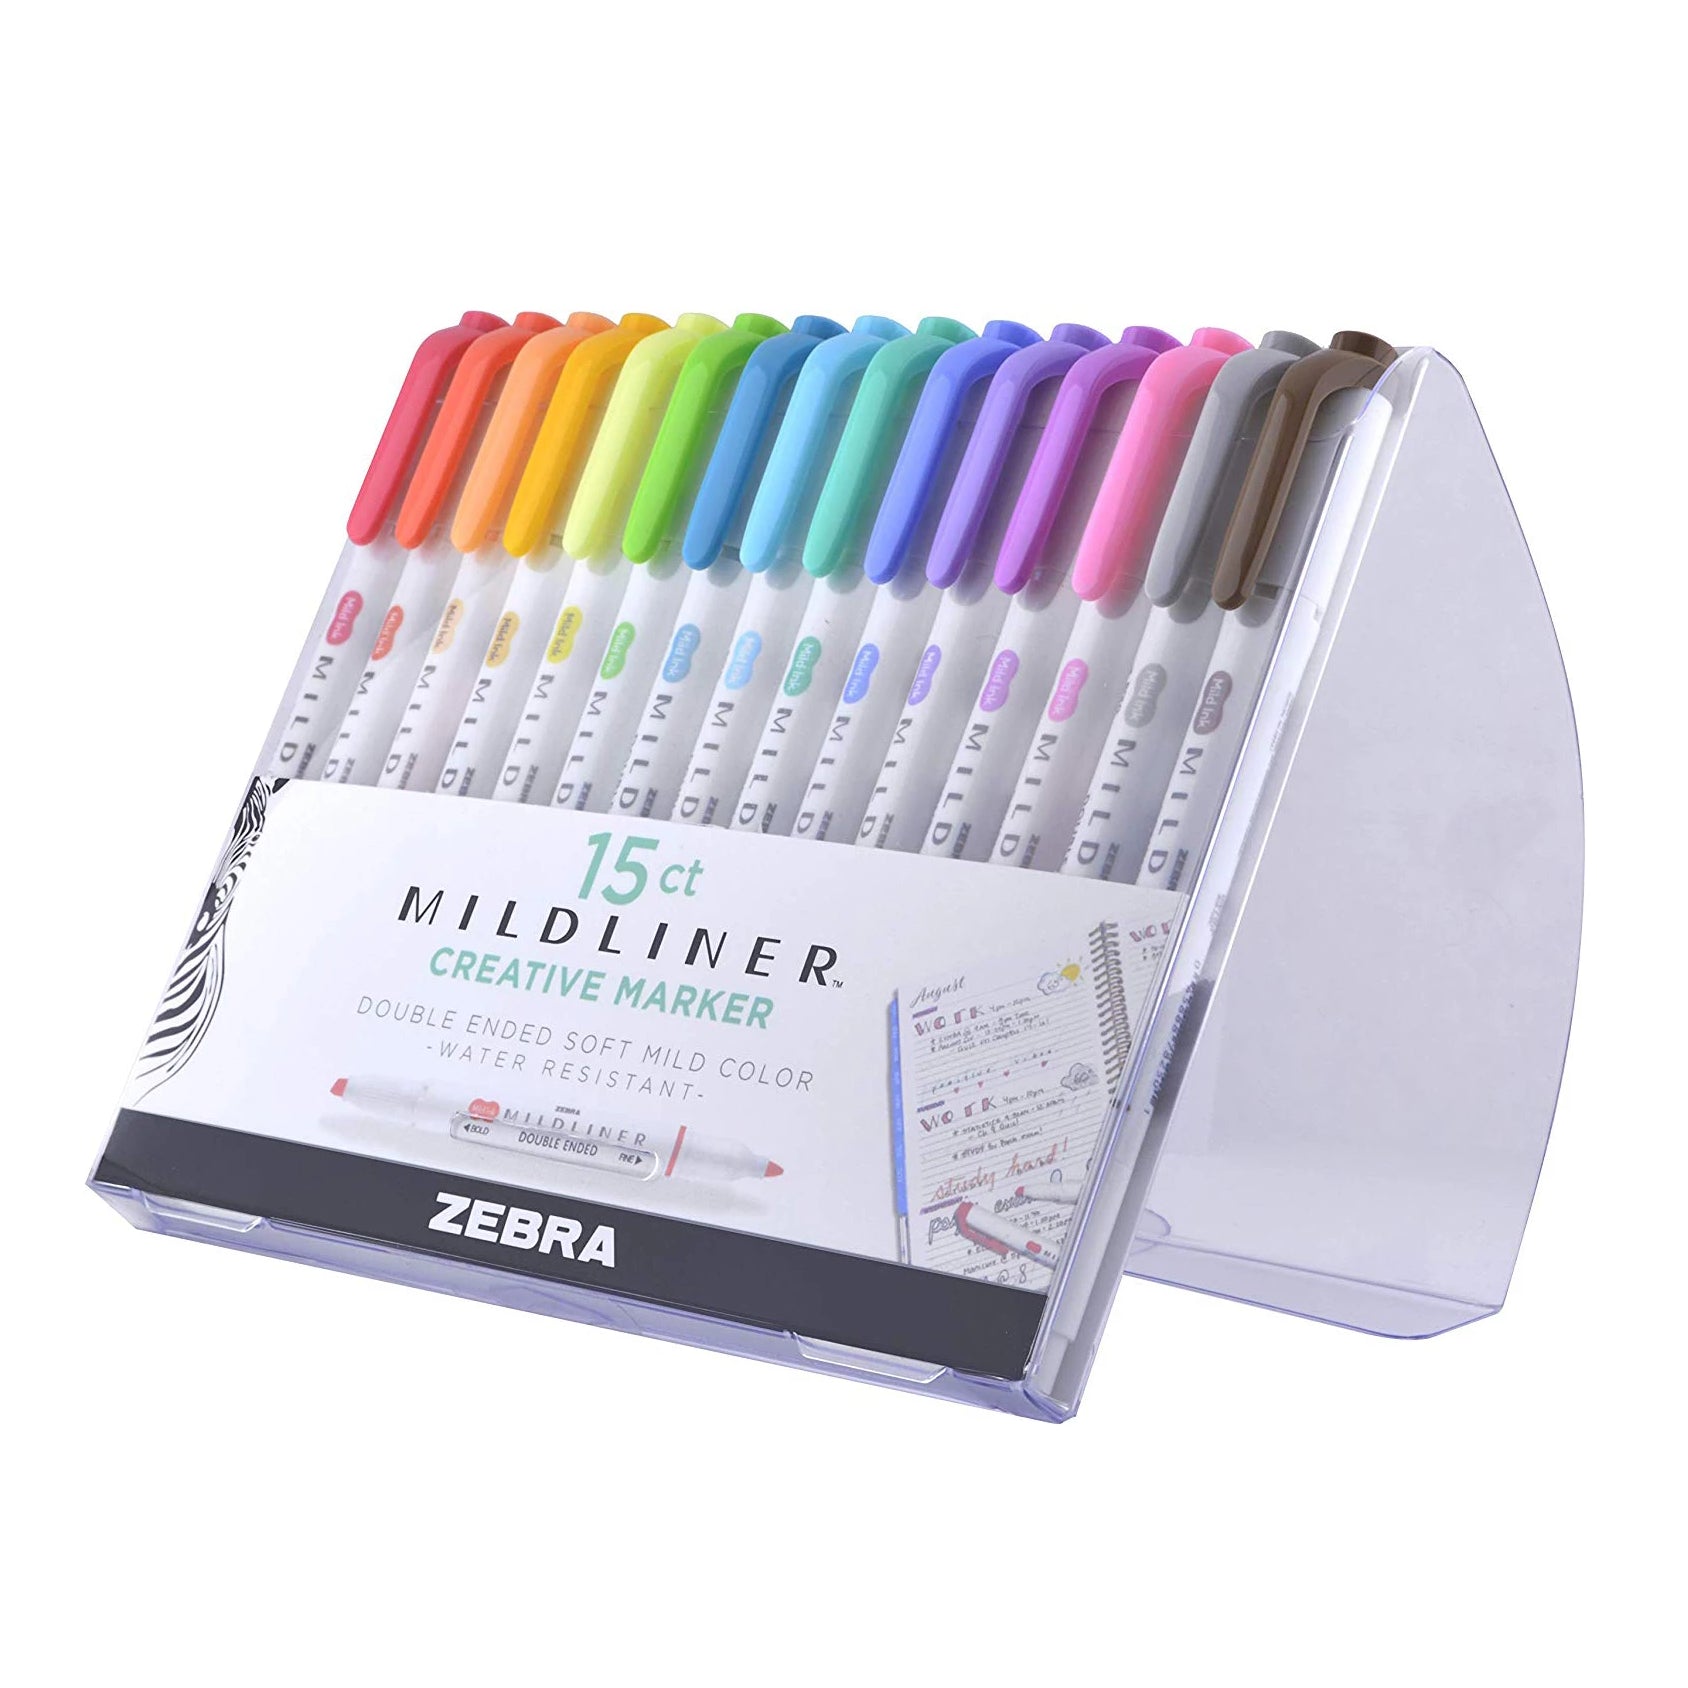 Zebra Mildliner™ Double Ended Creative Marker Set, Fluorescent